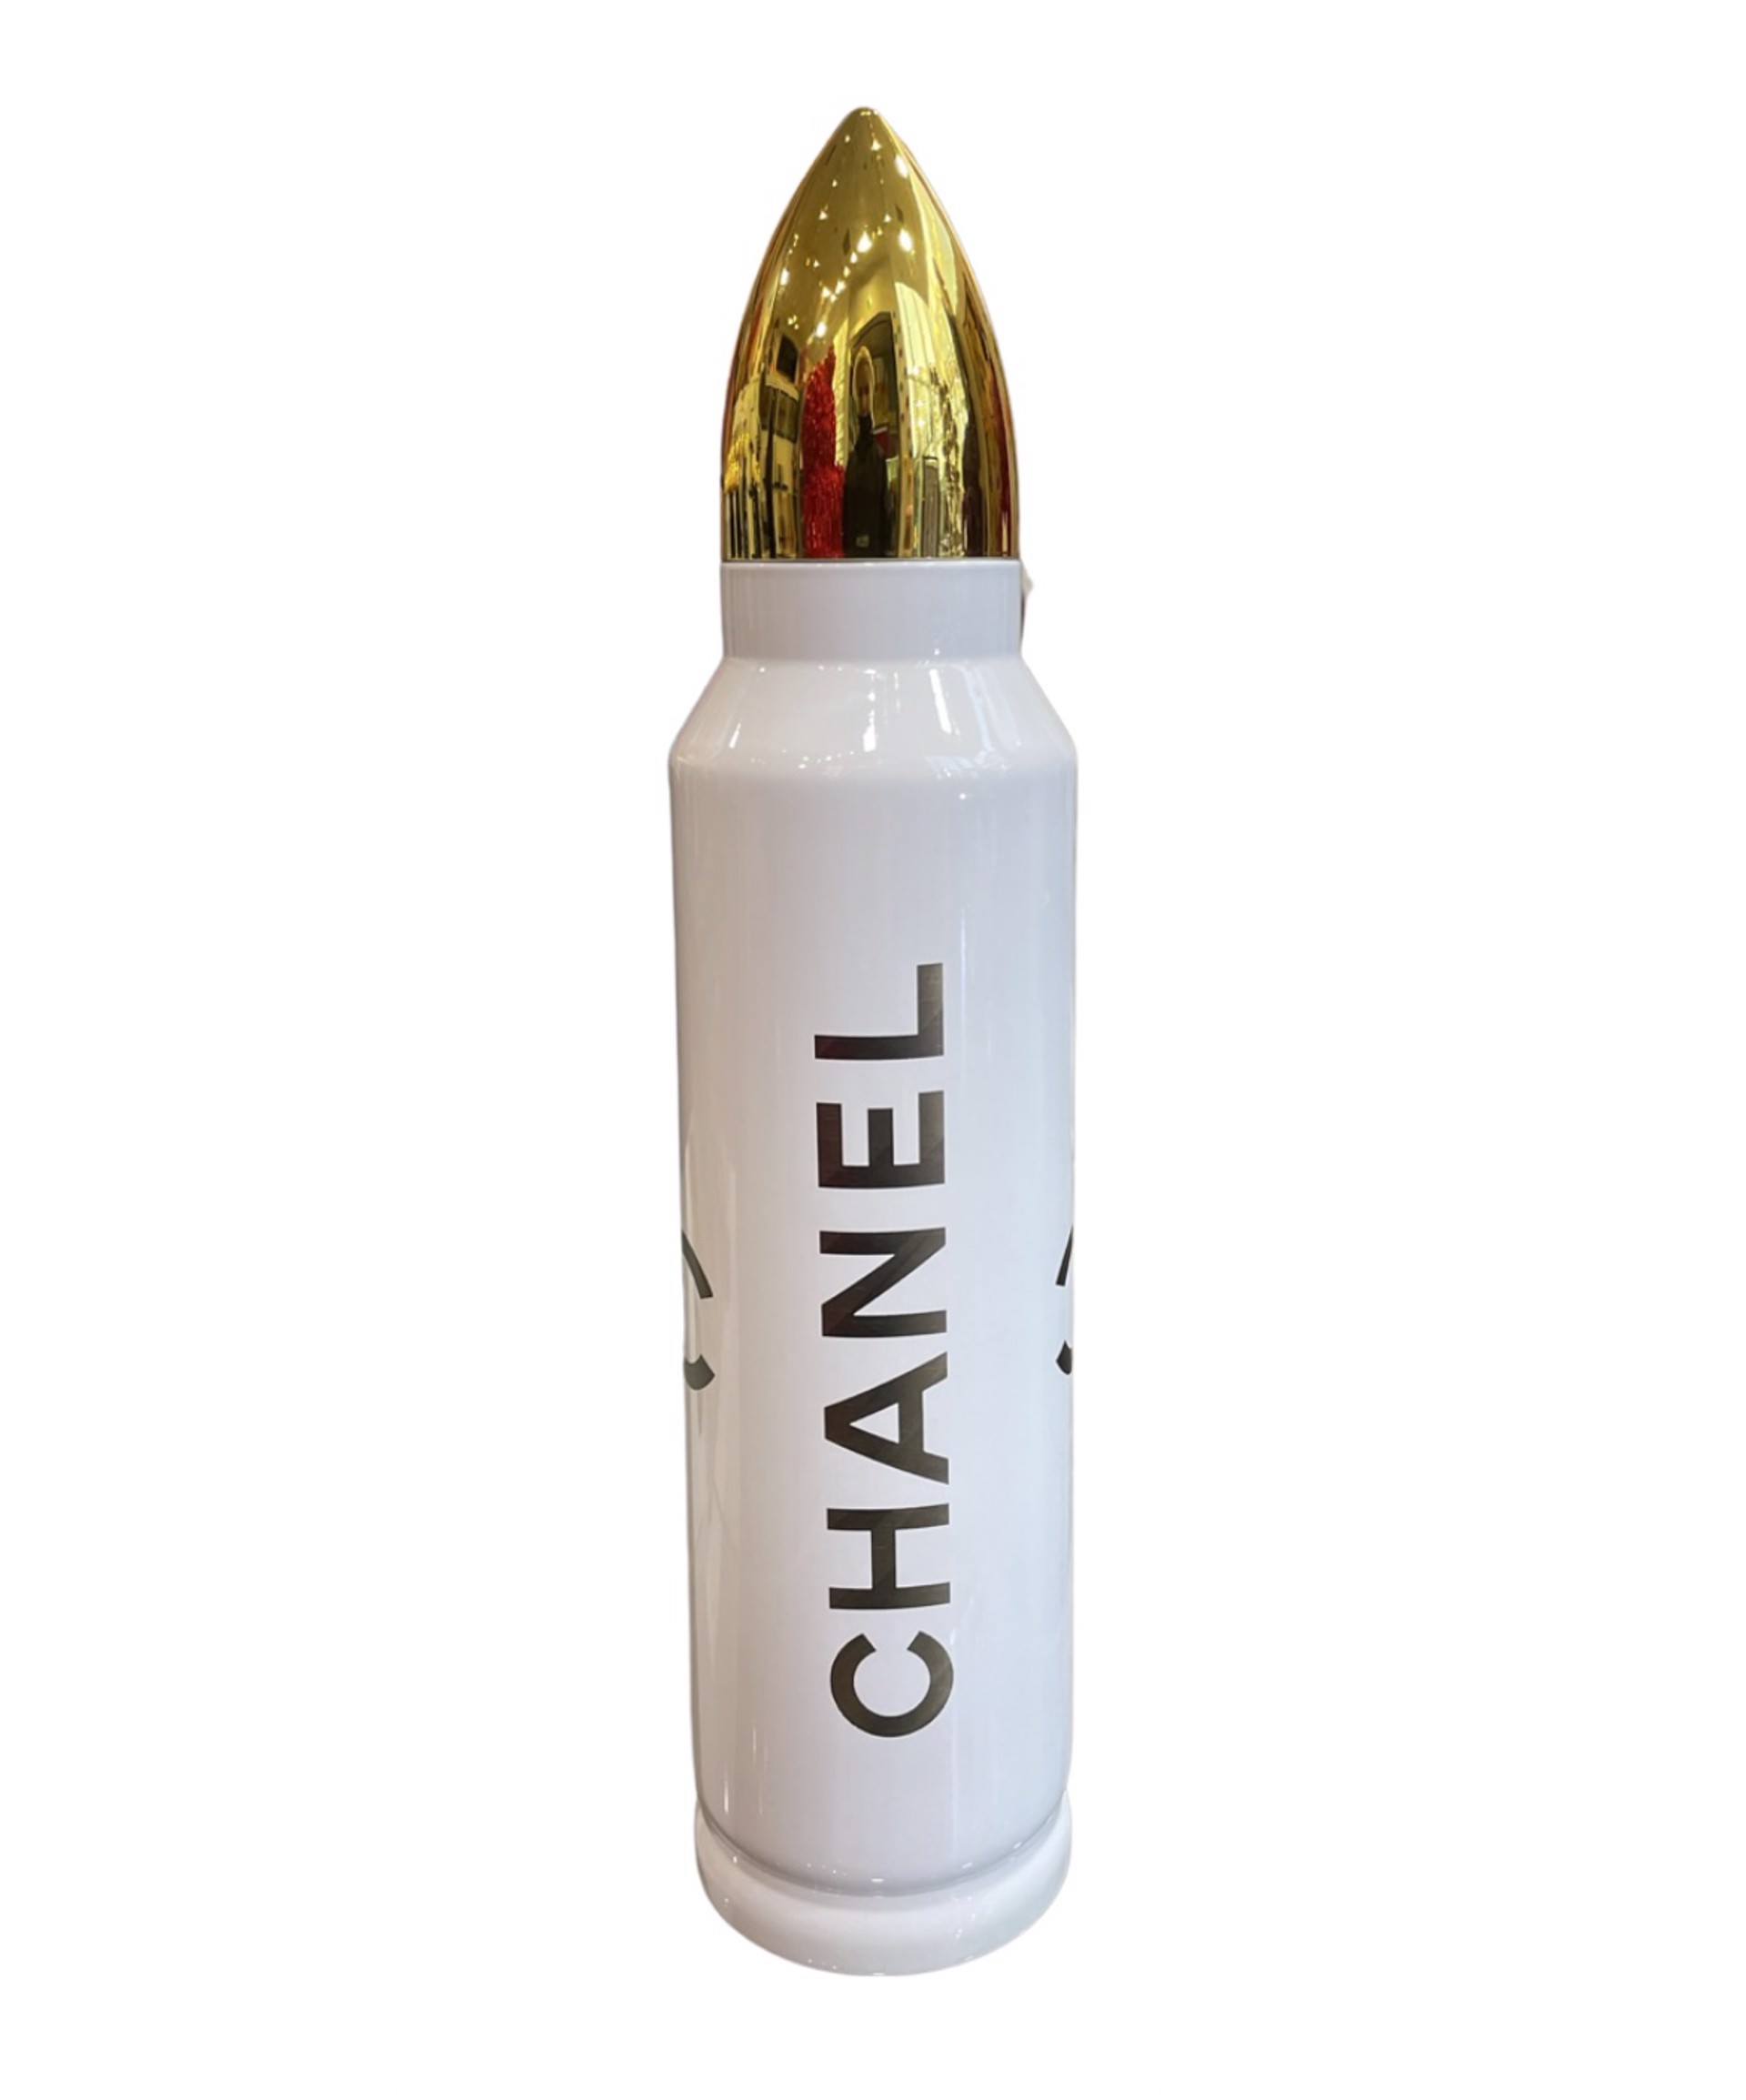 "Chanel" Large Black by Peaceful Brand Bullets by Efi Mashiah